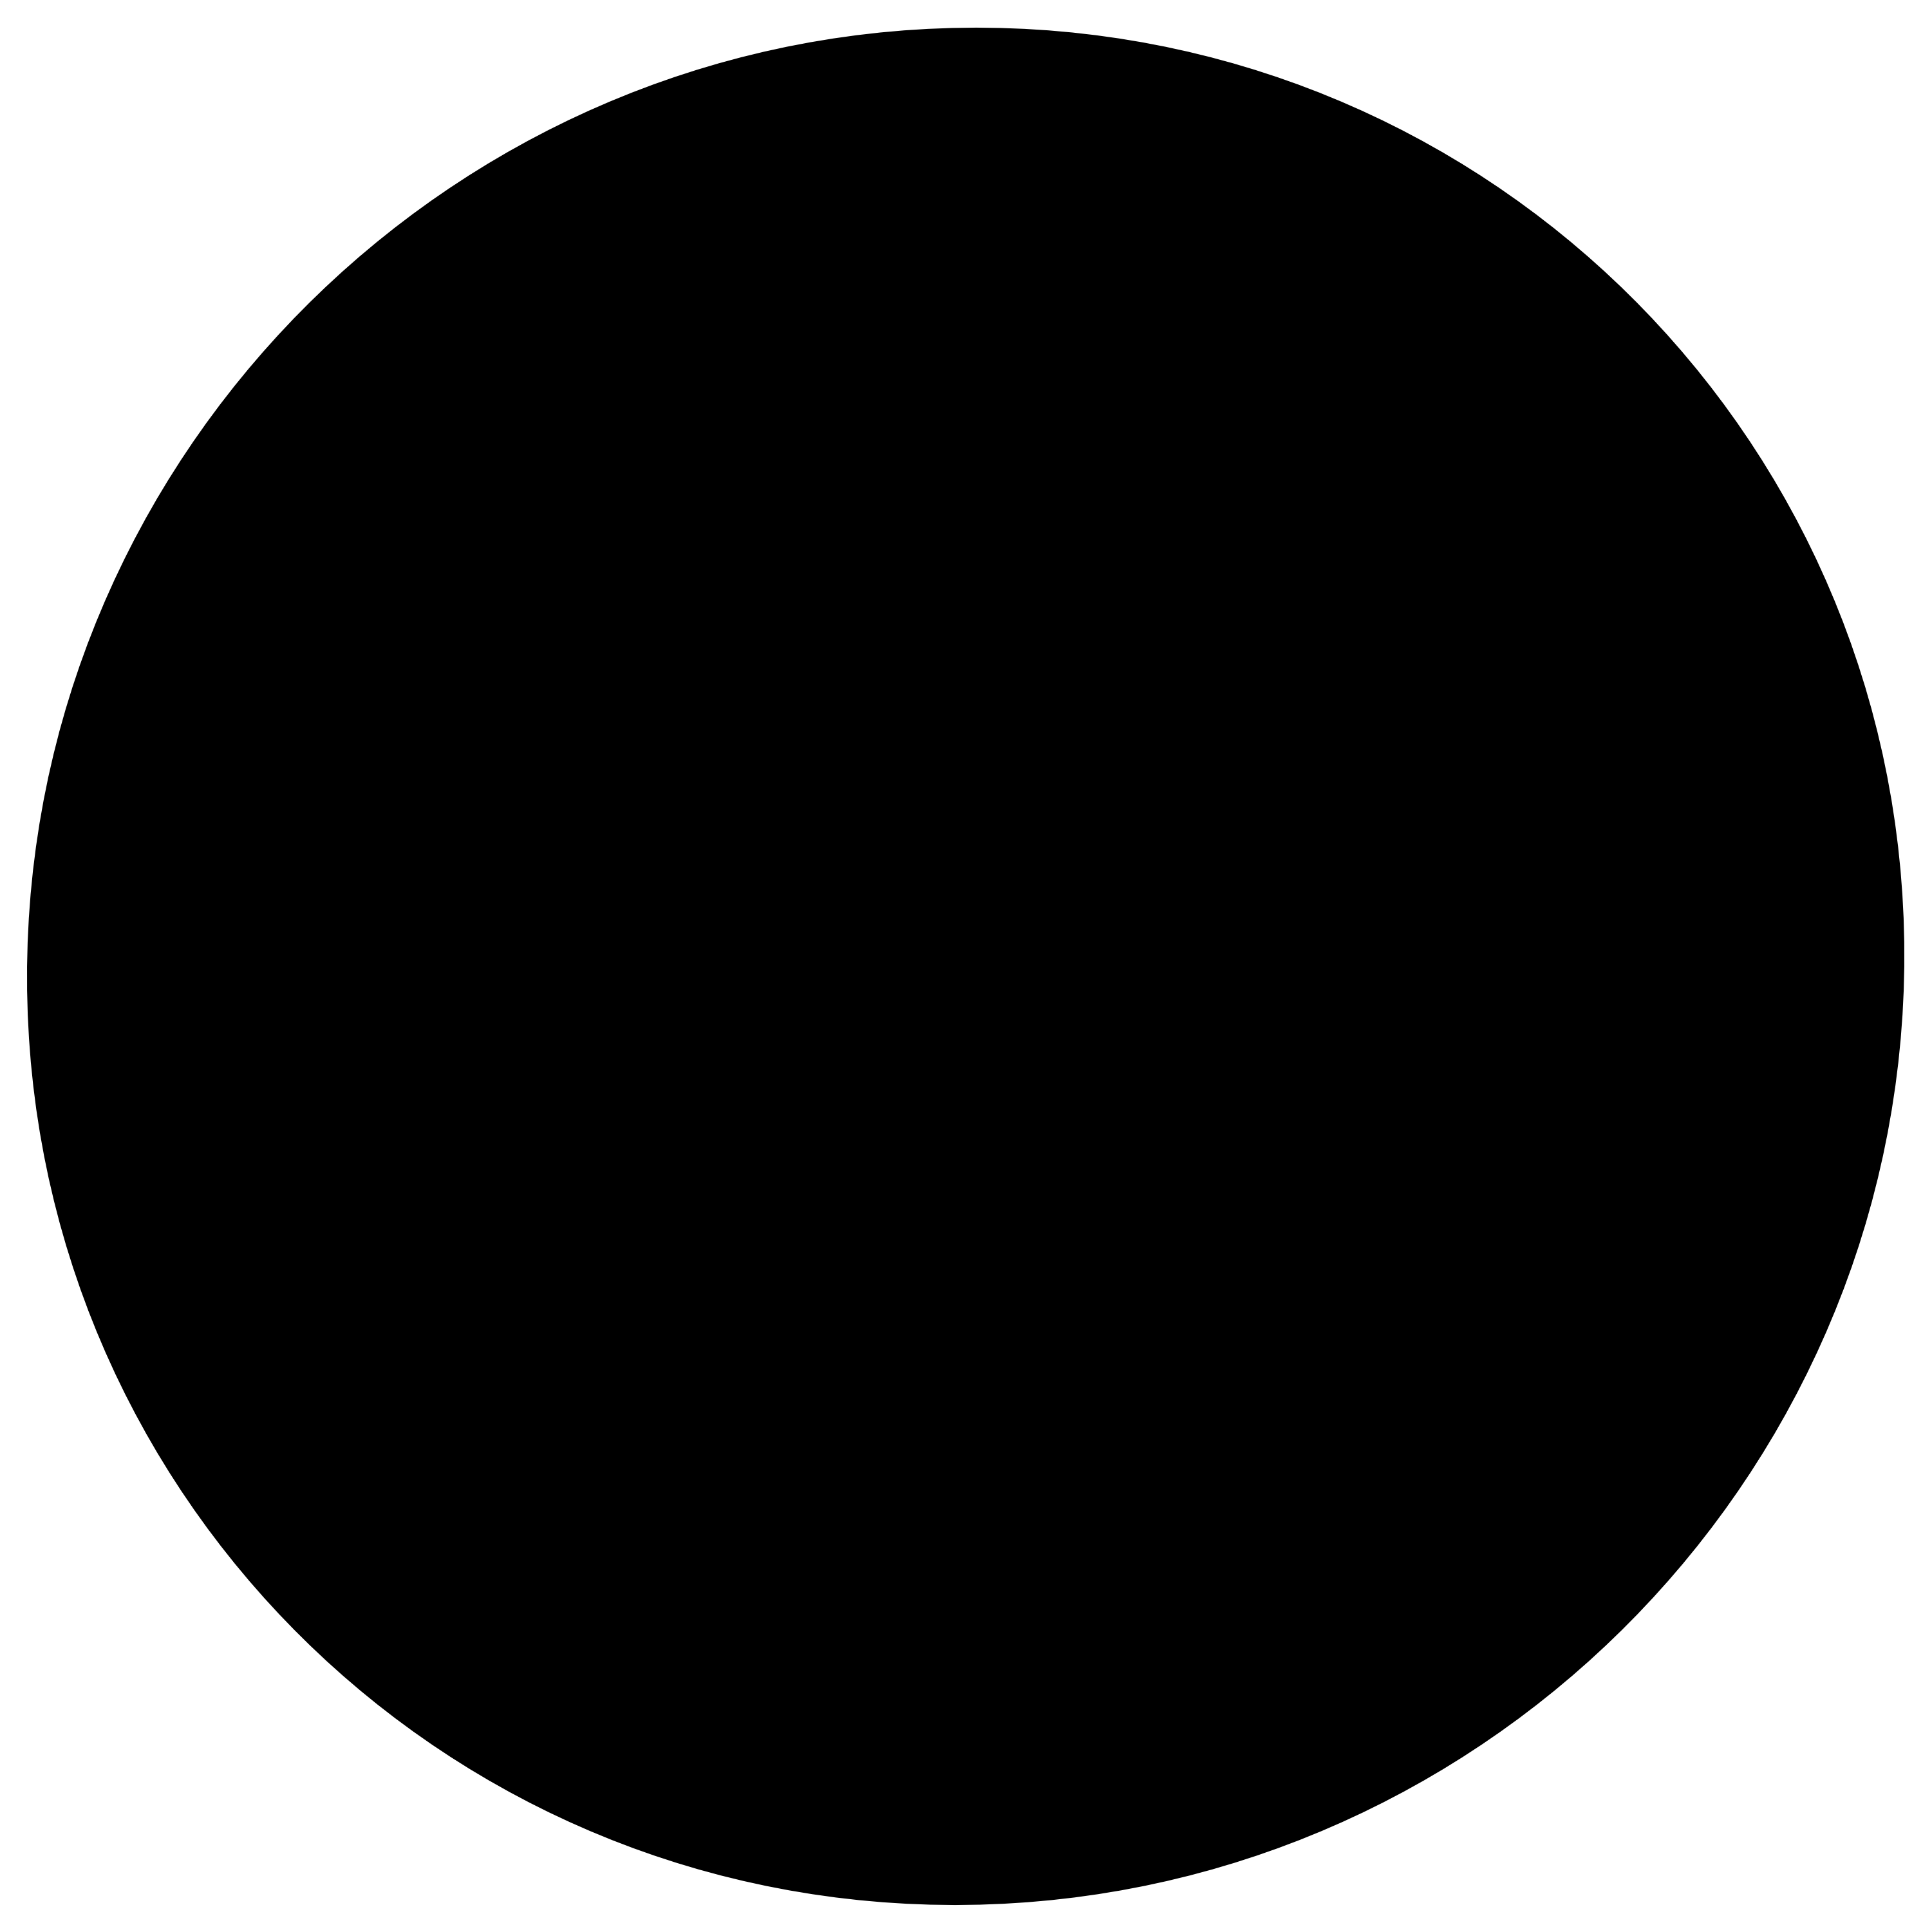 Fretta round. Черный круг. Черный кружок. Круглый черный круг. Черные кружочки.